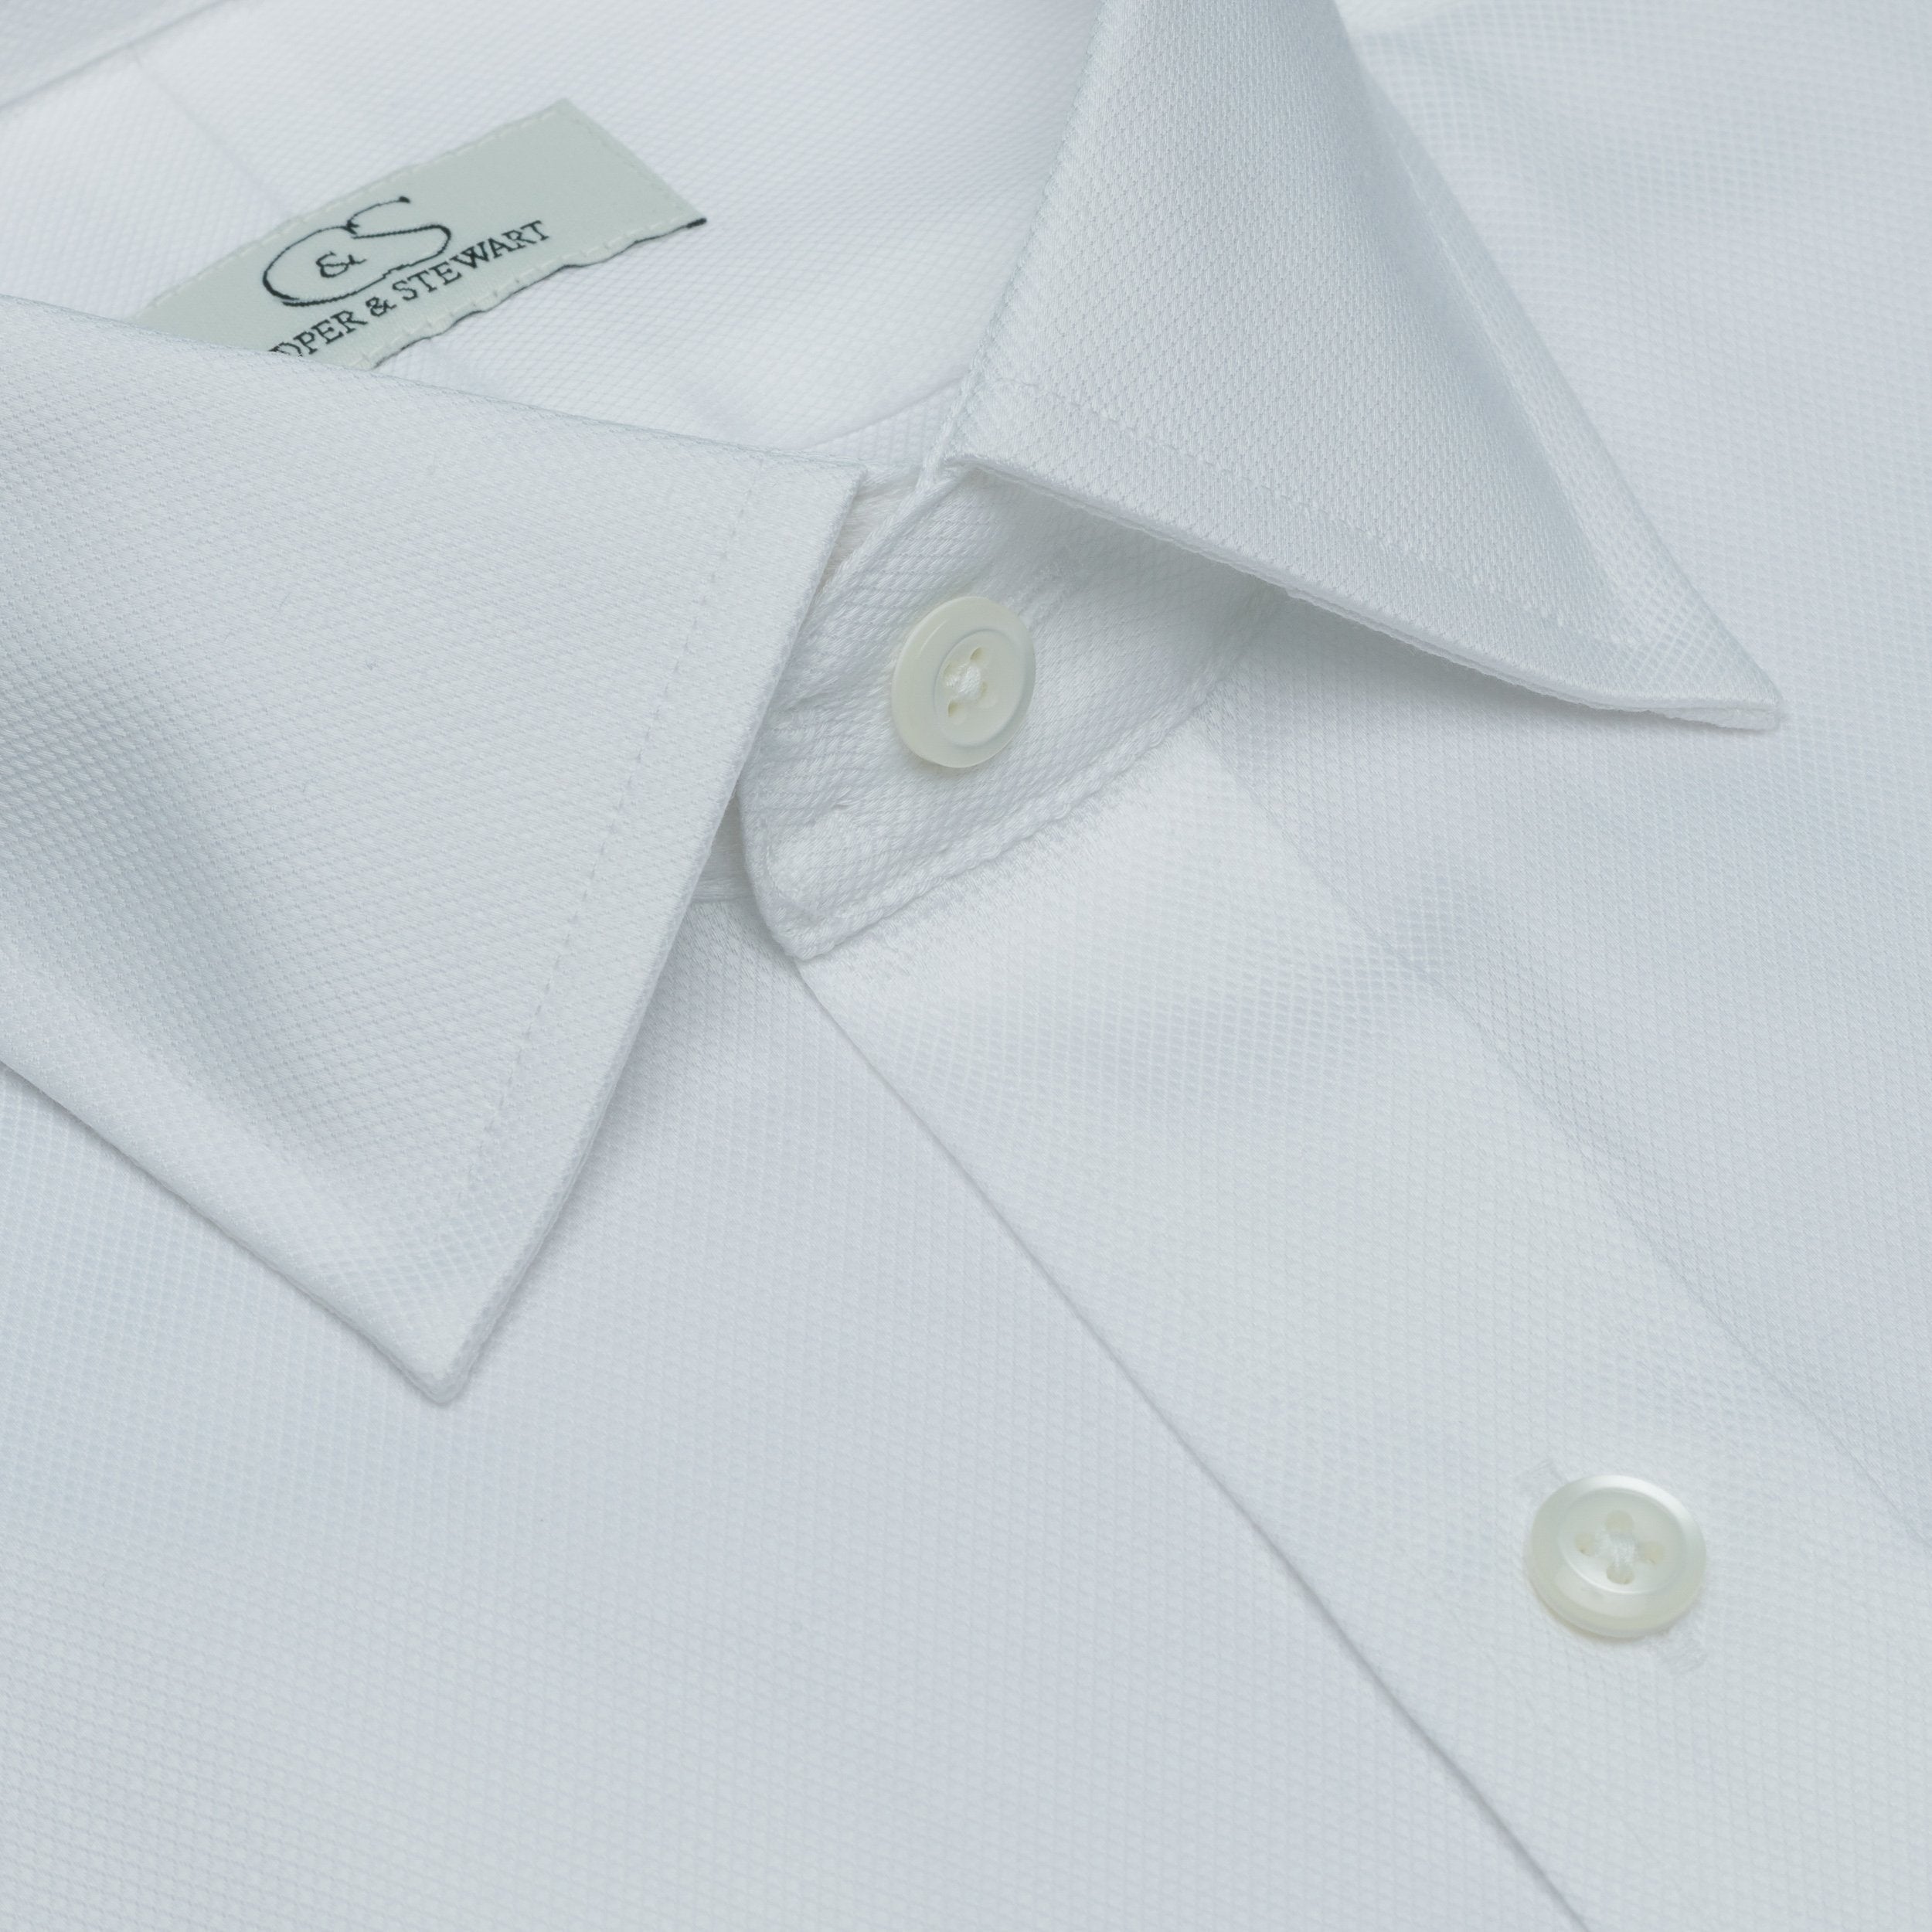 005 - White Royal Oxford SC Dress Shirt Best Dress Shirt 